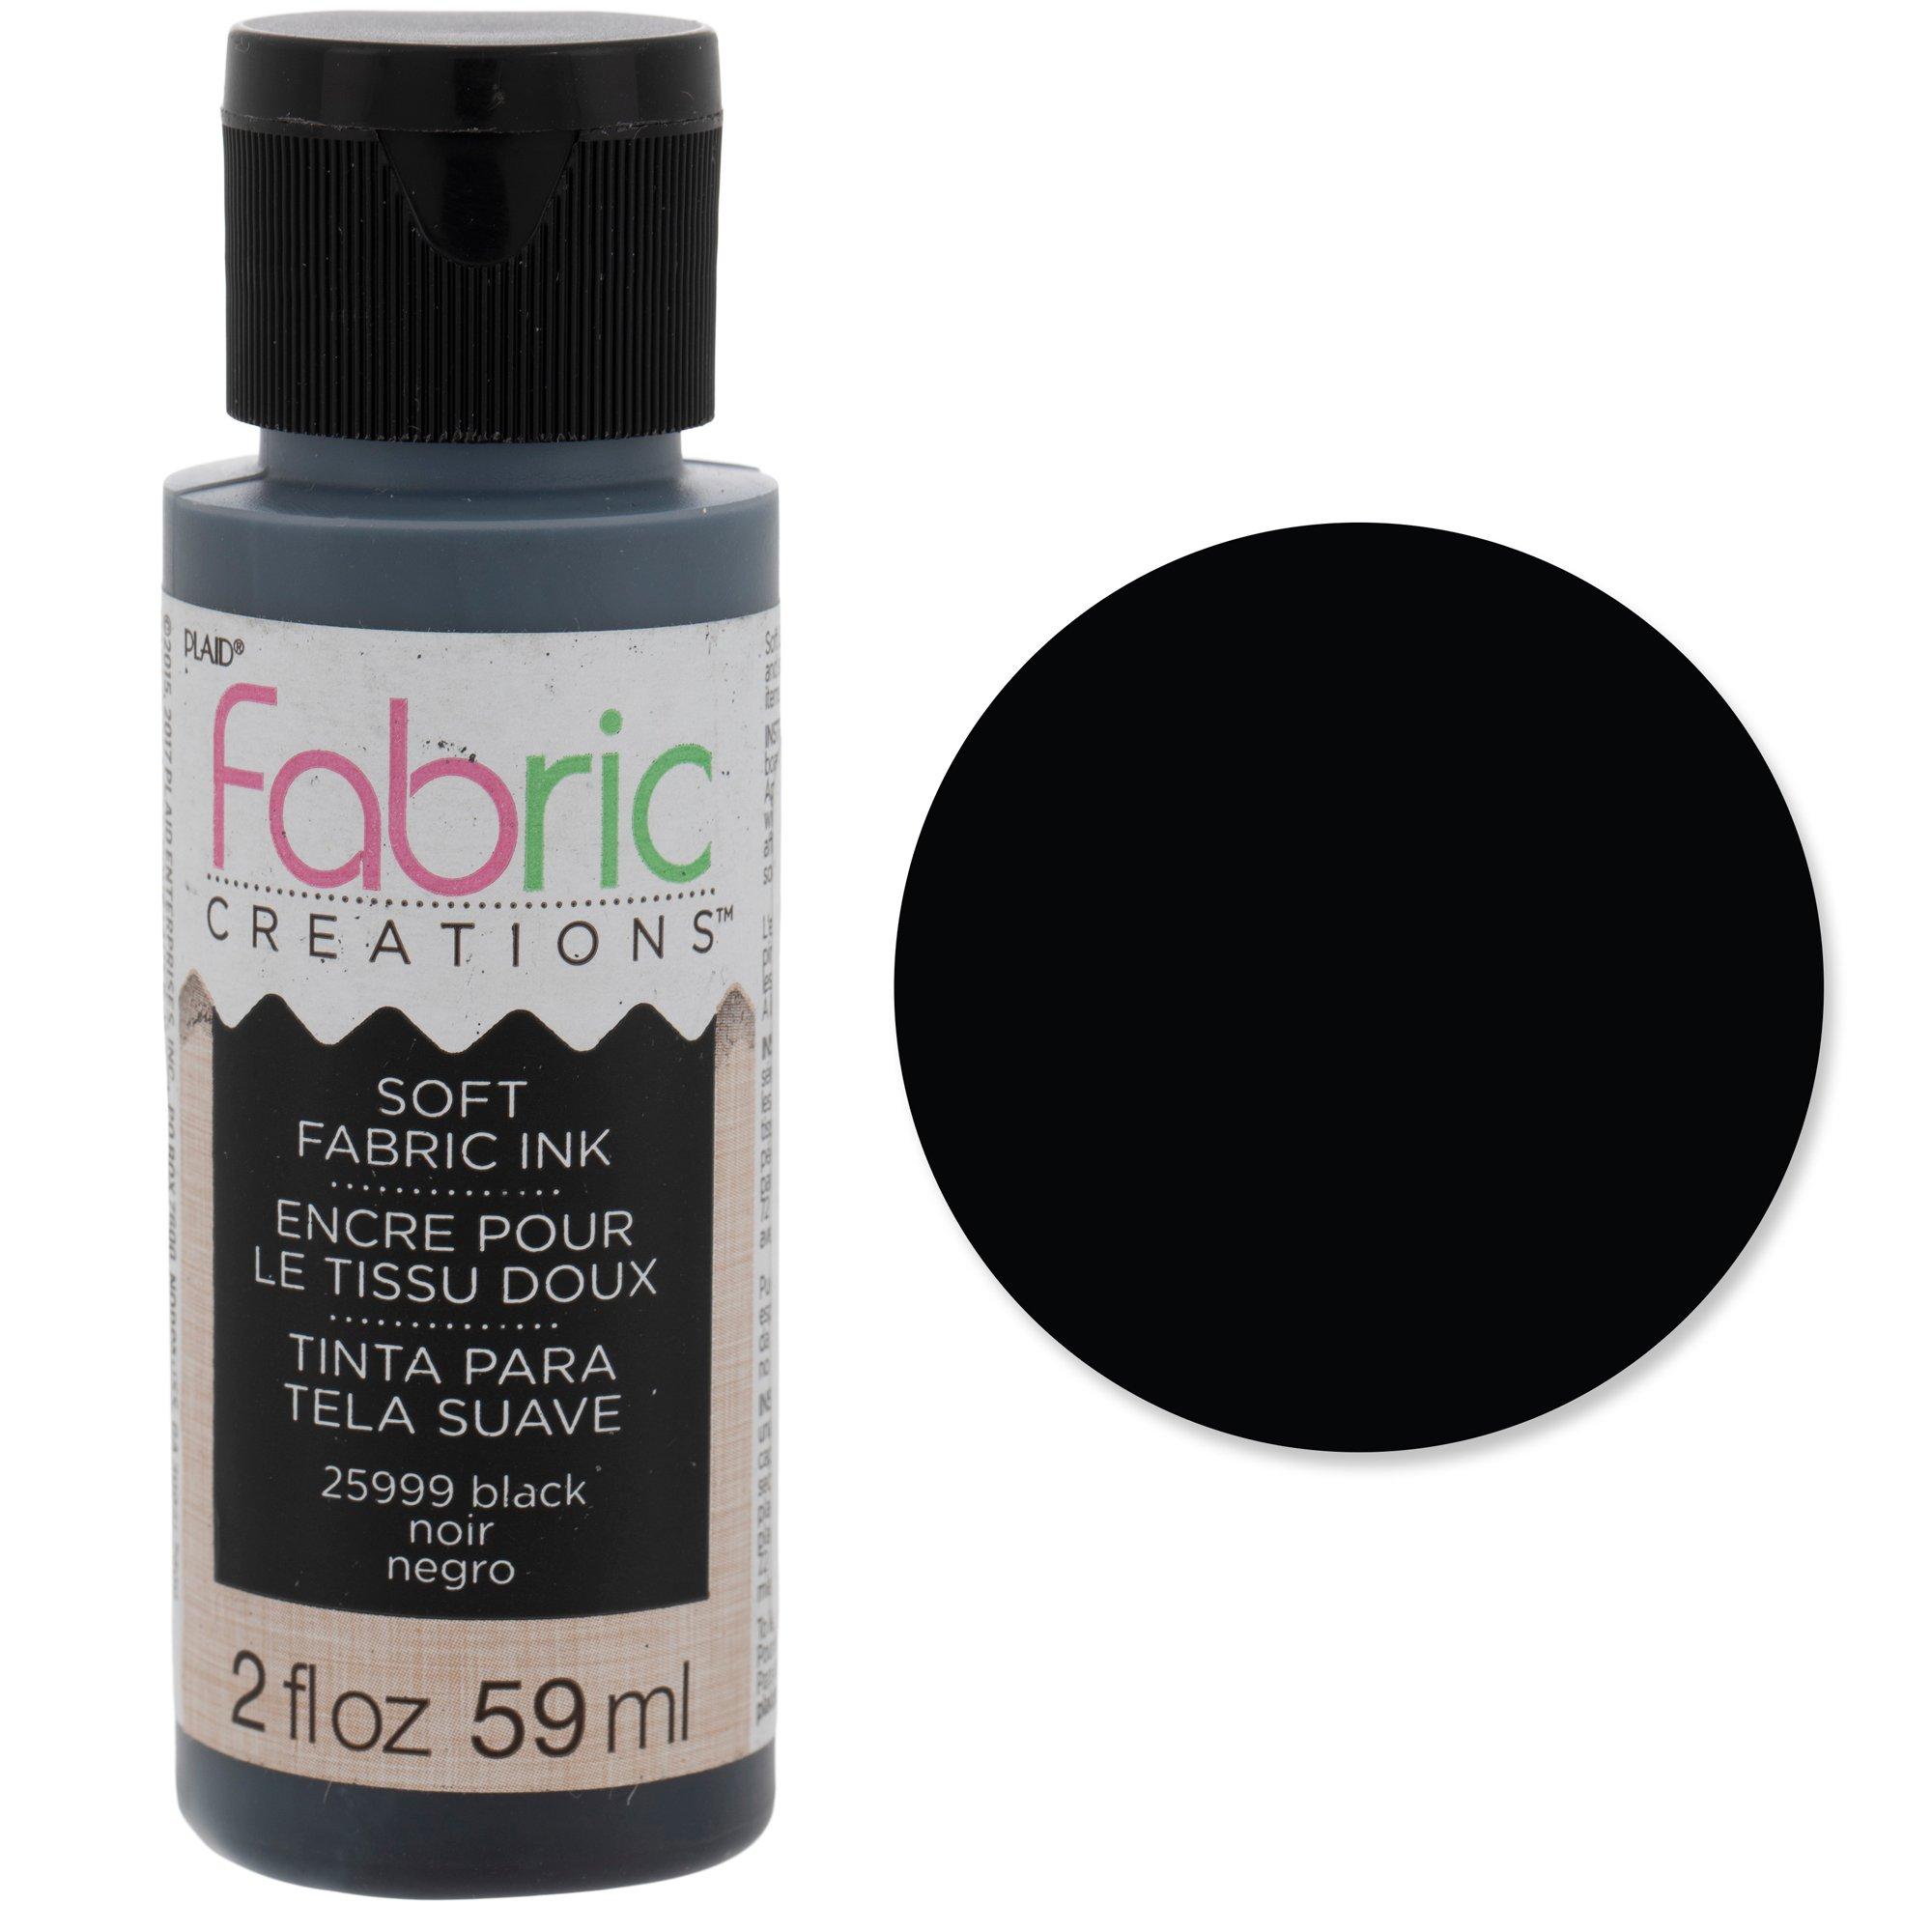 Plaid Fabric Creations Soft Fabric Ink - Black 2 oz.